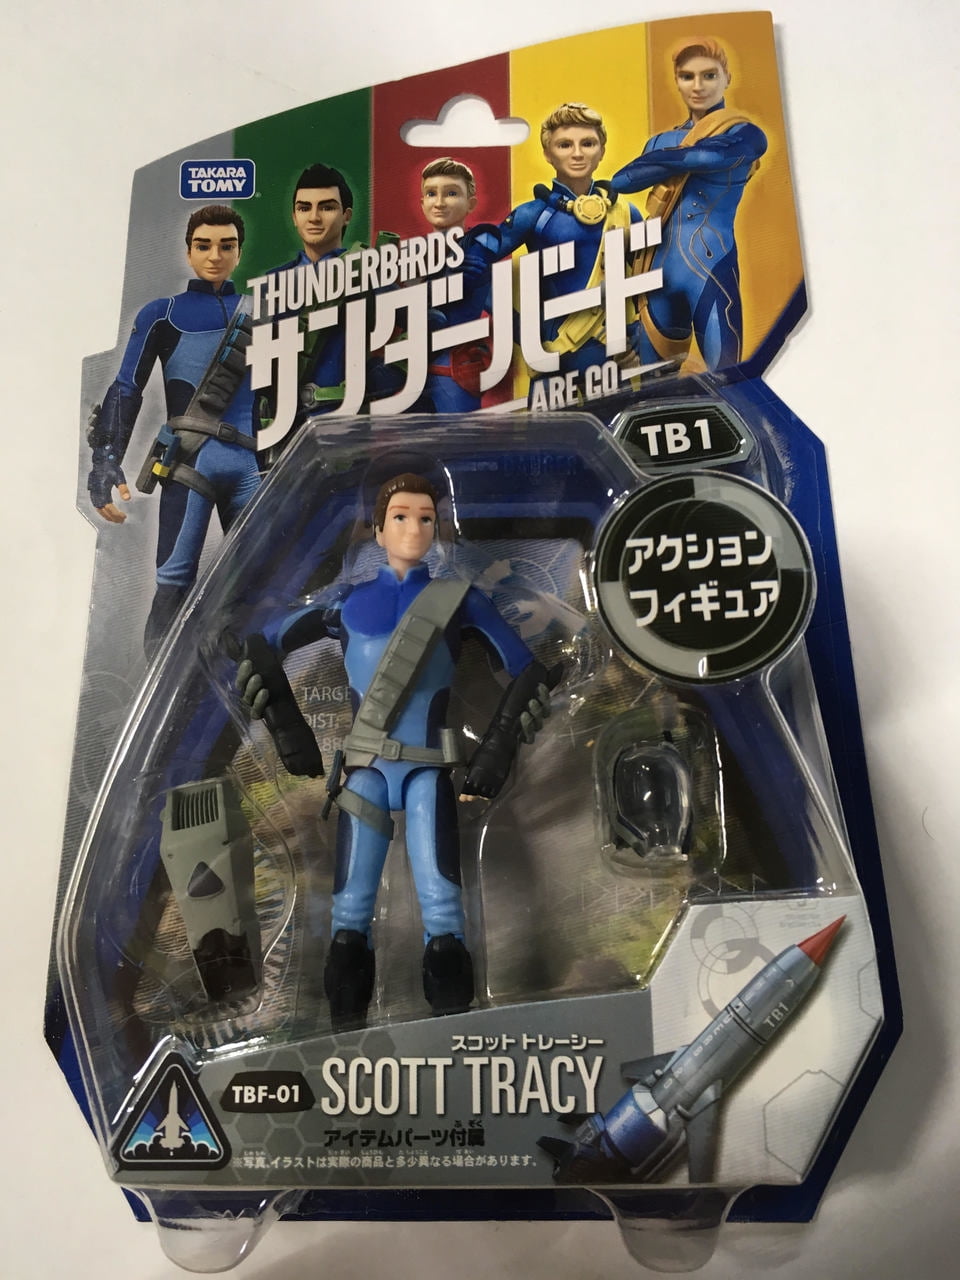 Thunderbirds Action Figure - Scott Tracy - Walmart.com